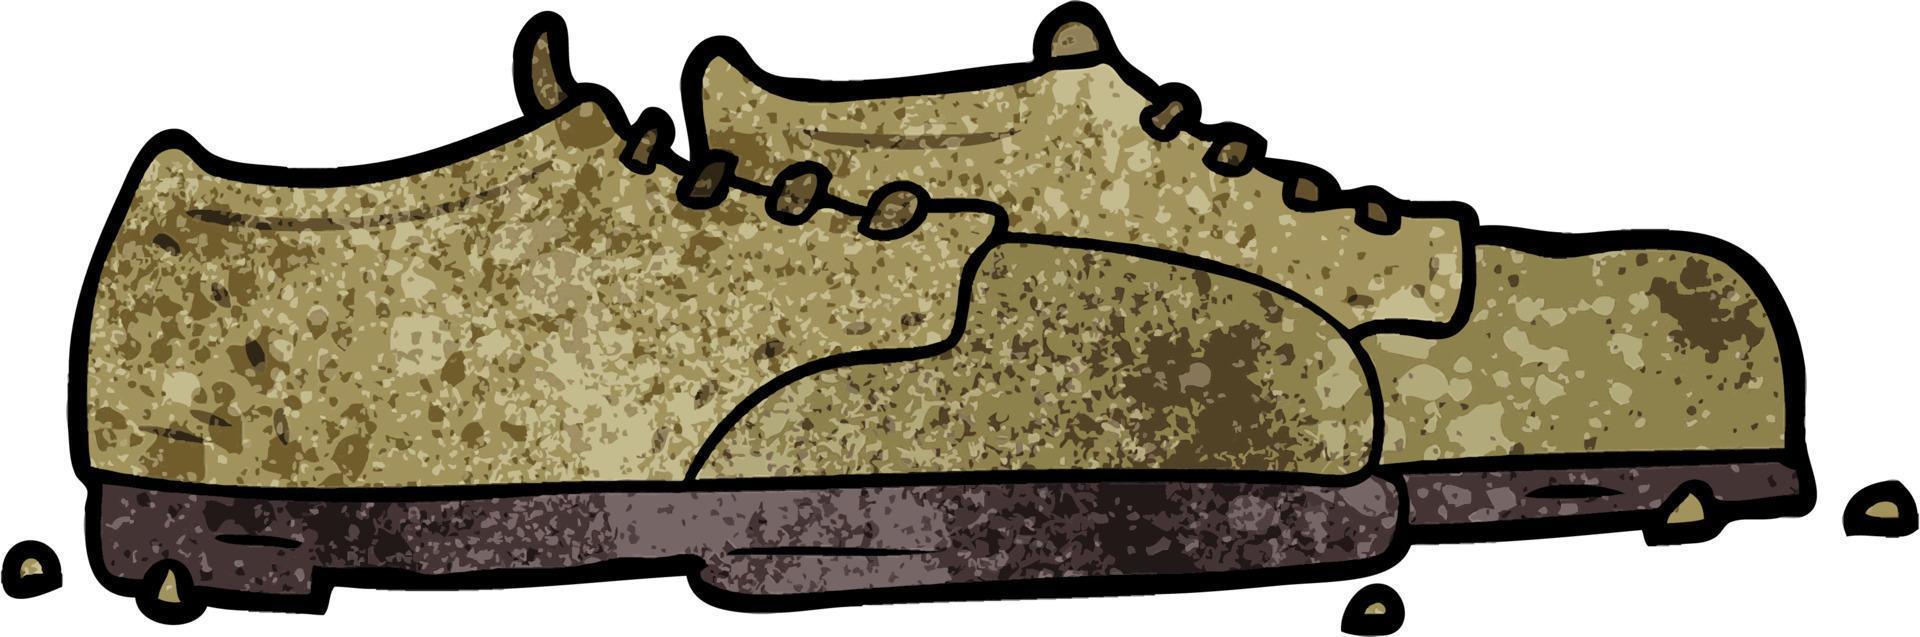 Retro grunge texture cartoon cute old shoes vector